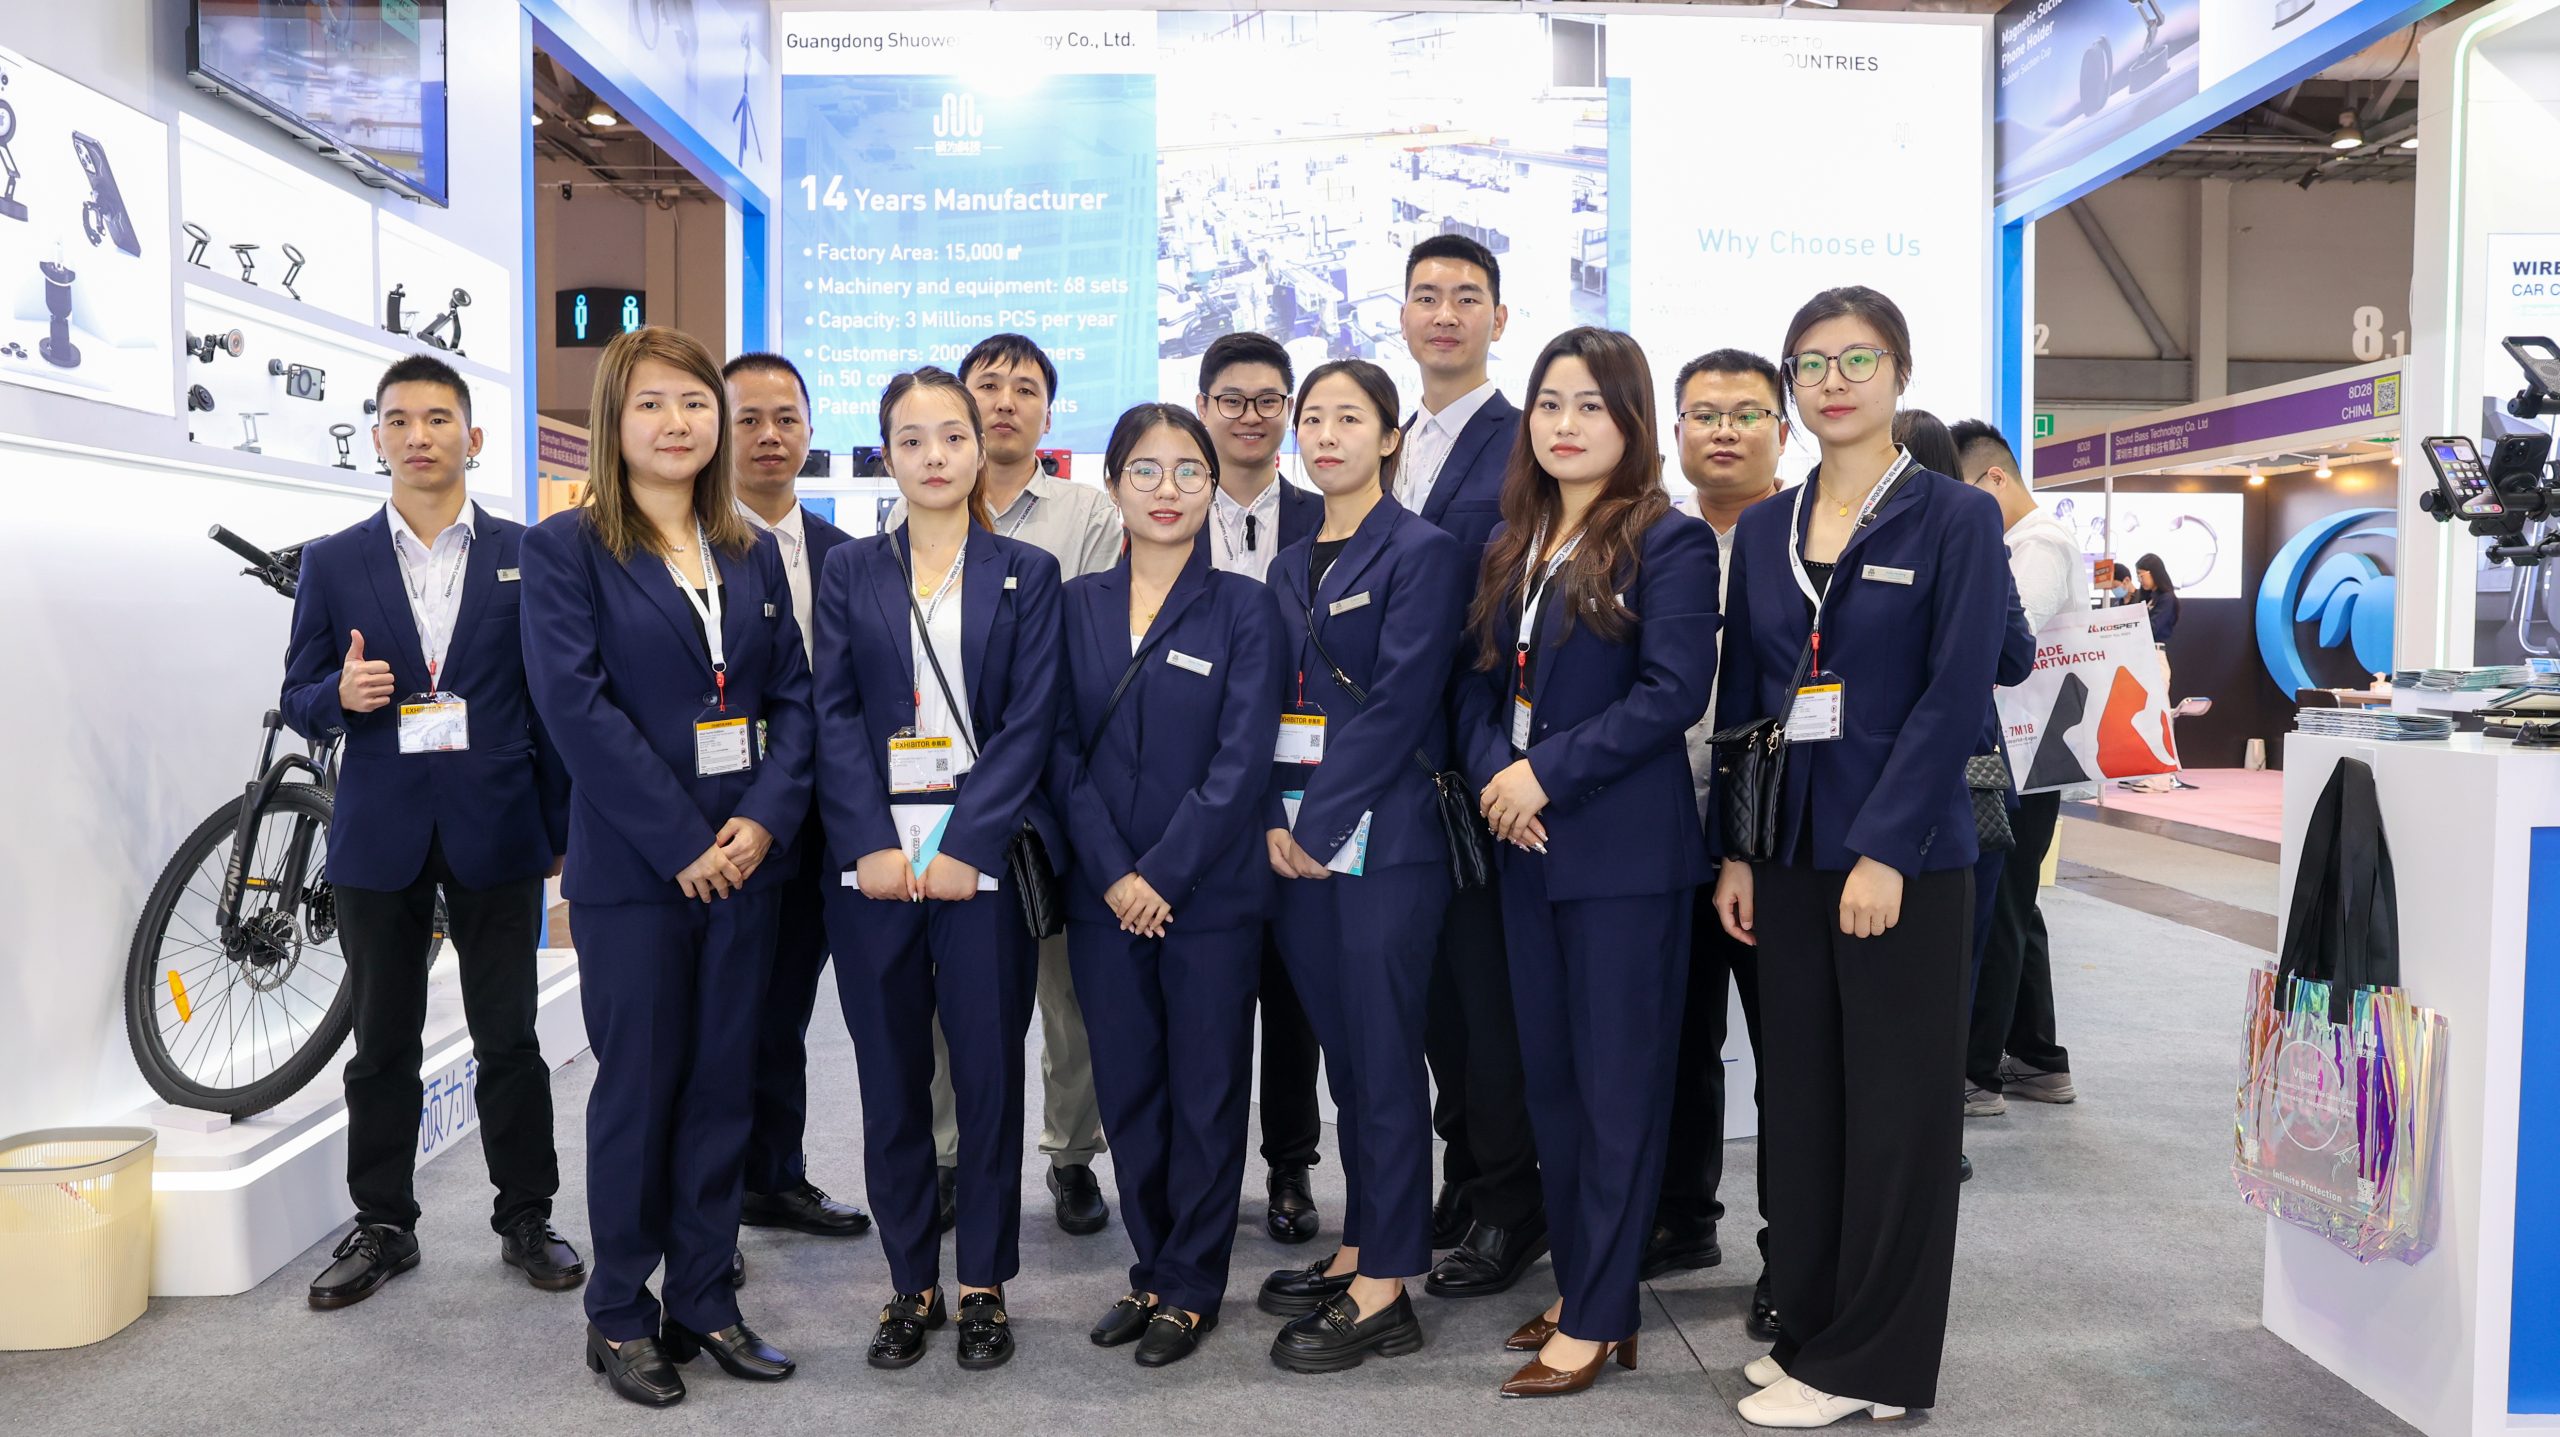 Guangdong Shuowei Technology Co., Ltd. Shines at the Global Sources Consumer Electronics Show in Hong Kong